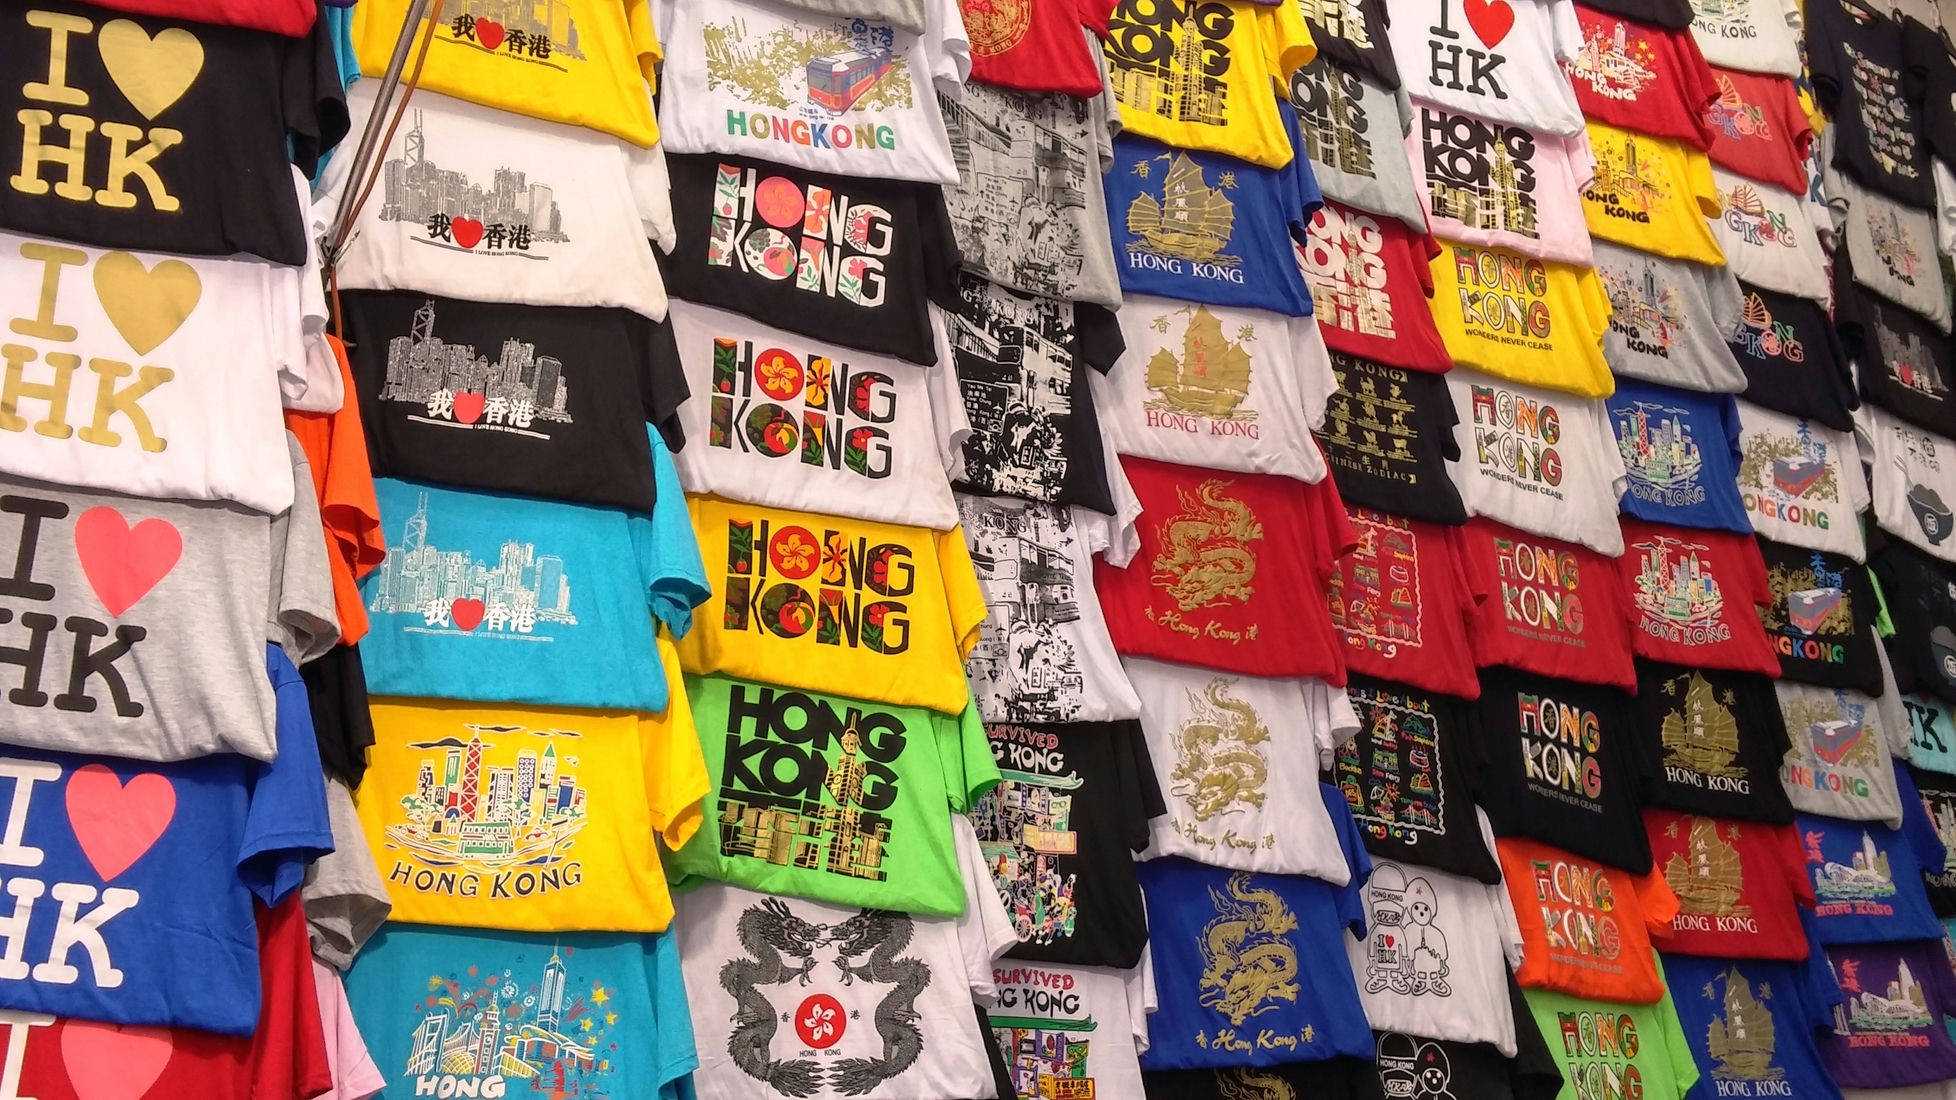 Mong-Kok-Ladies-Market-T-shirts-stall